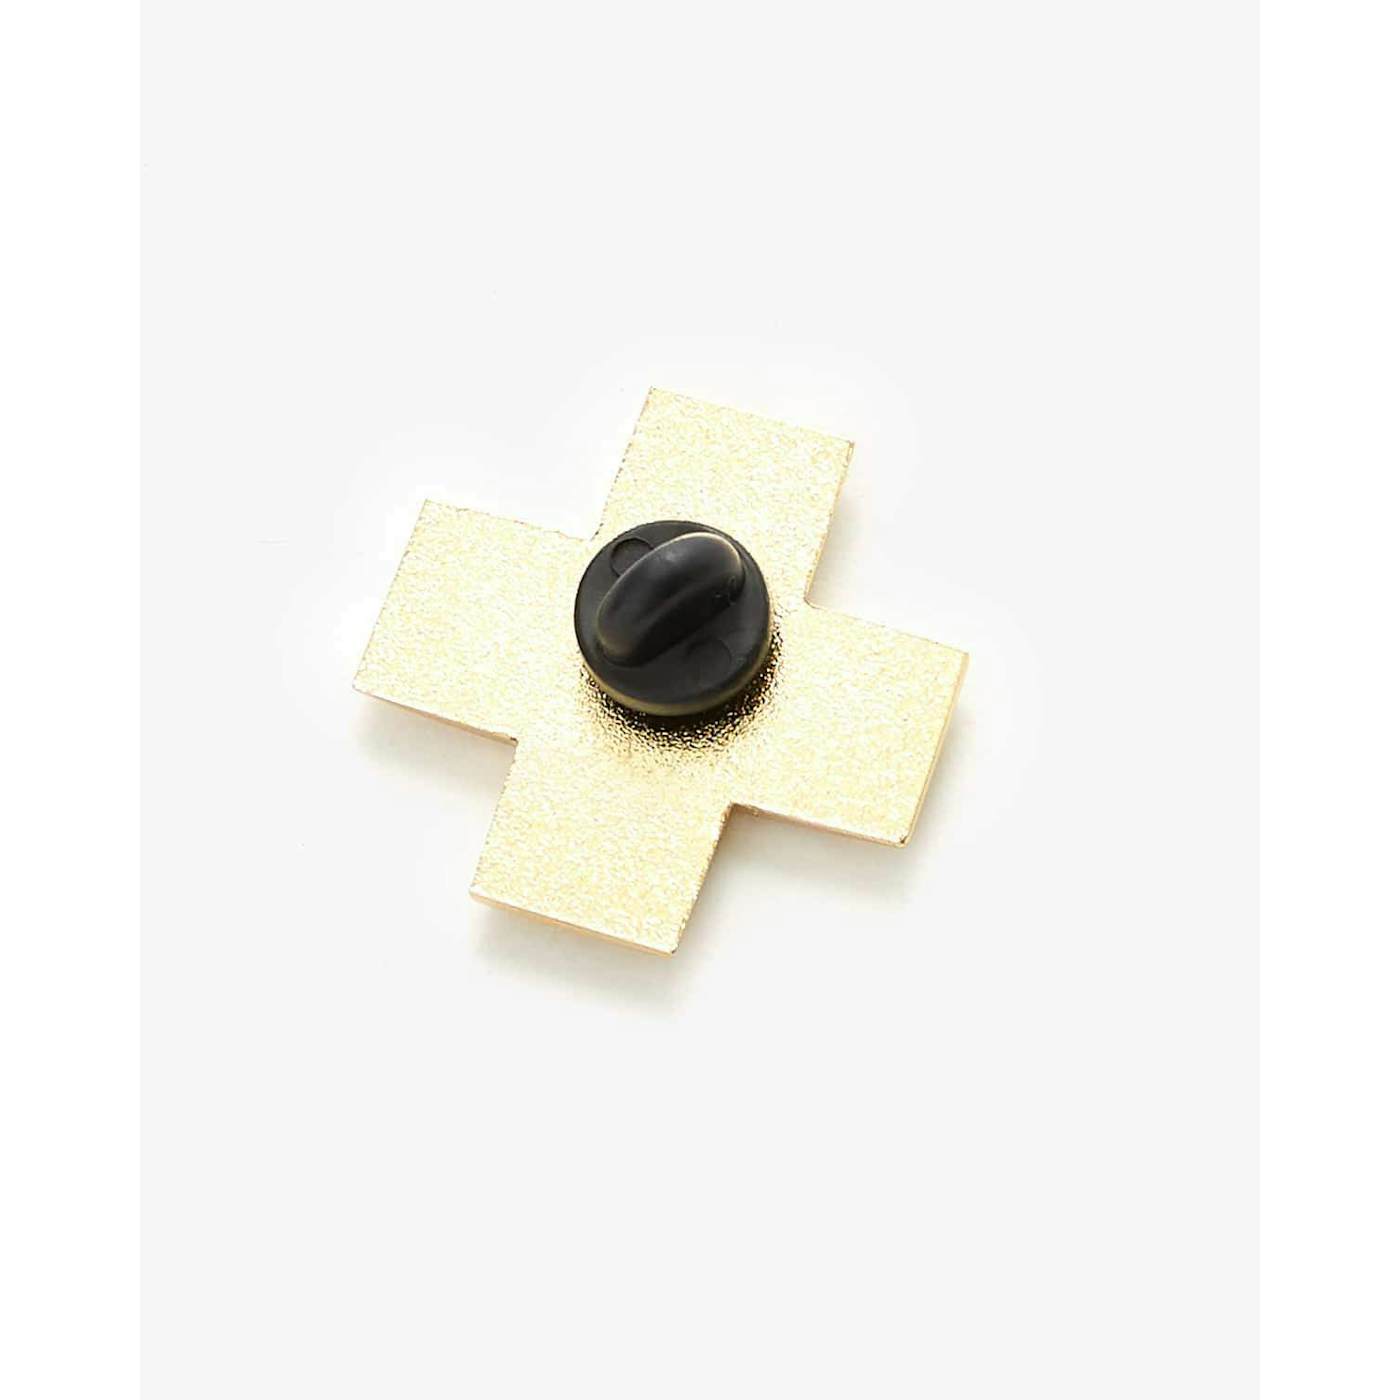 The Beloved 'Cross' Enamel Pin - Black/Gold